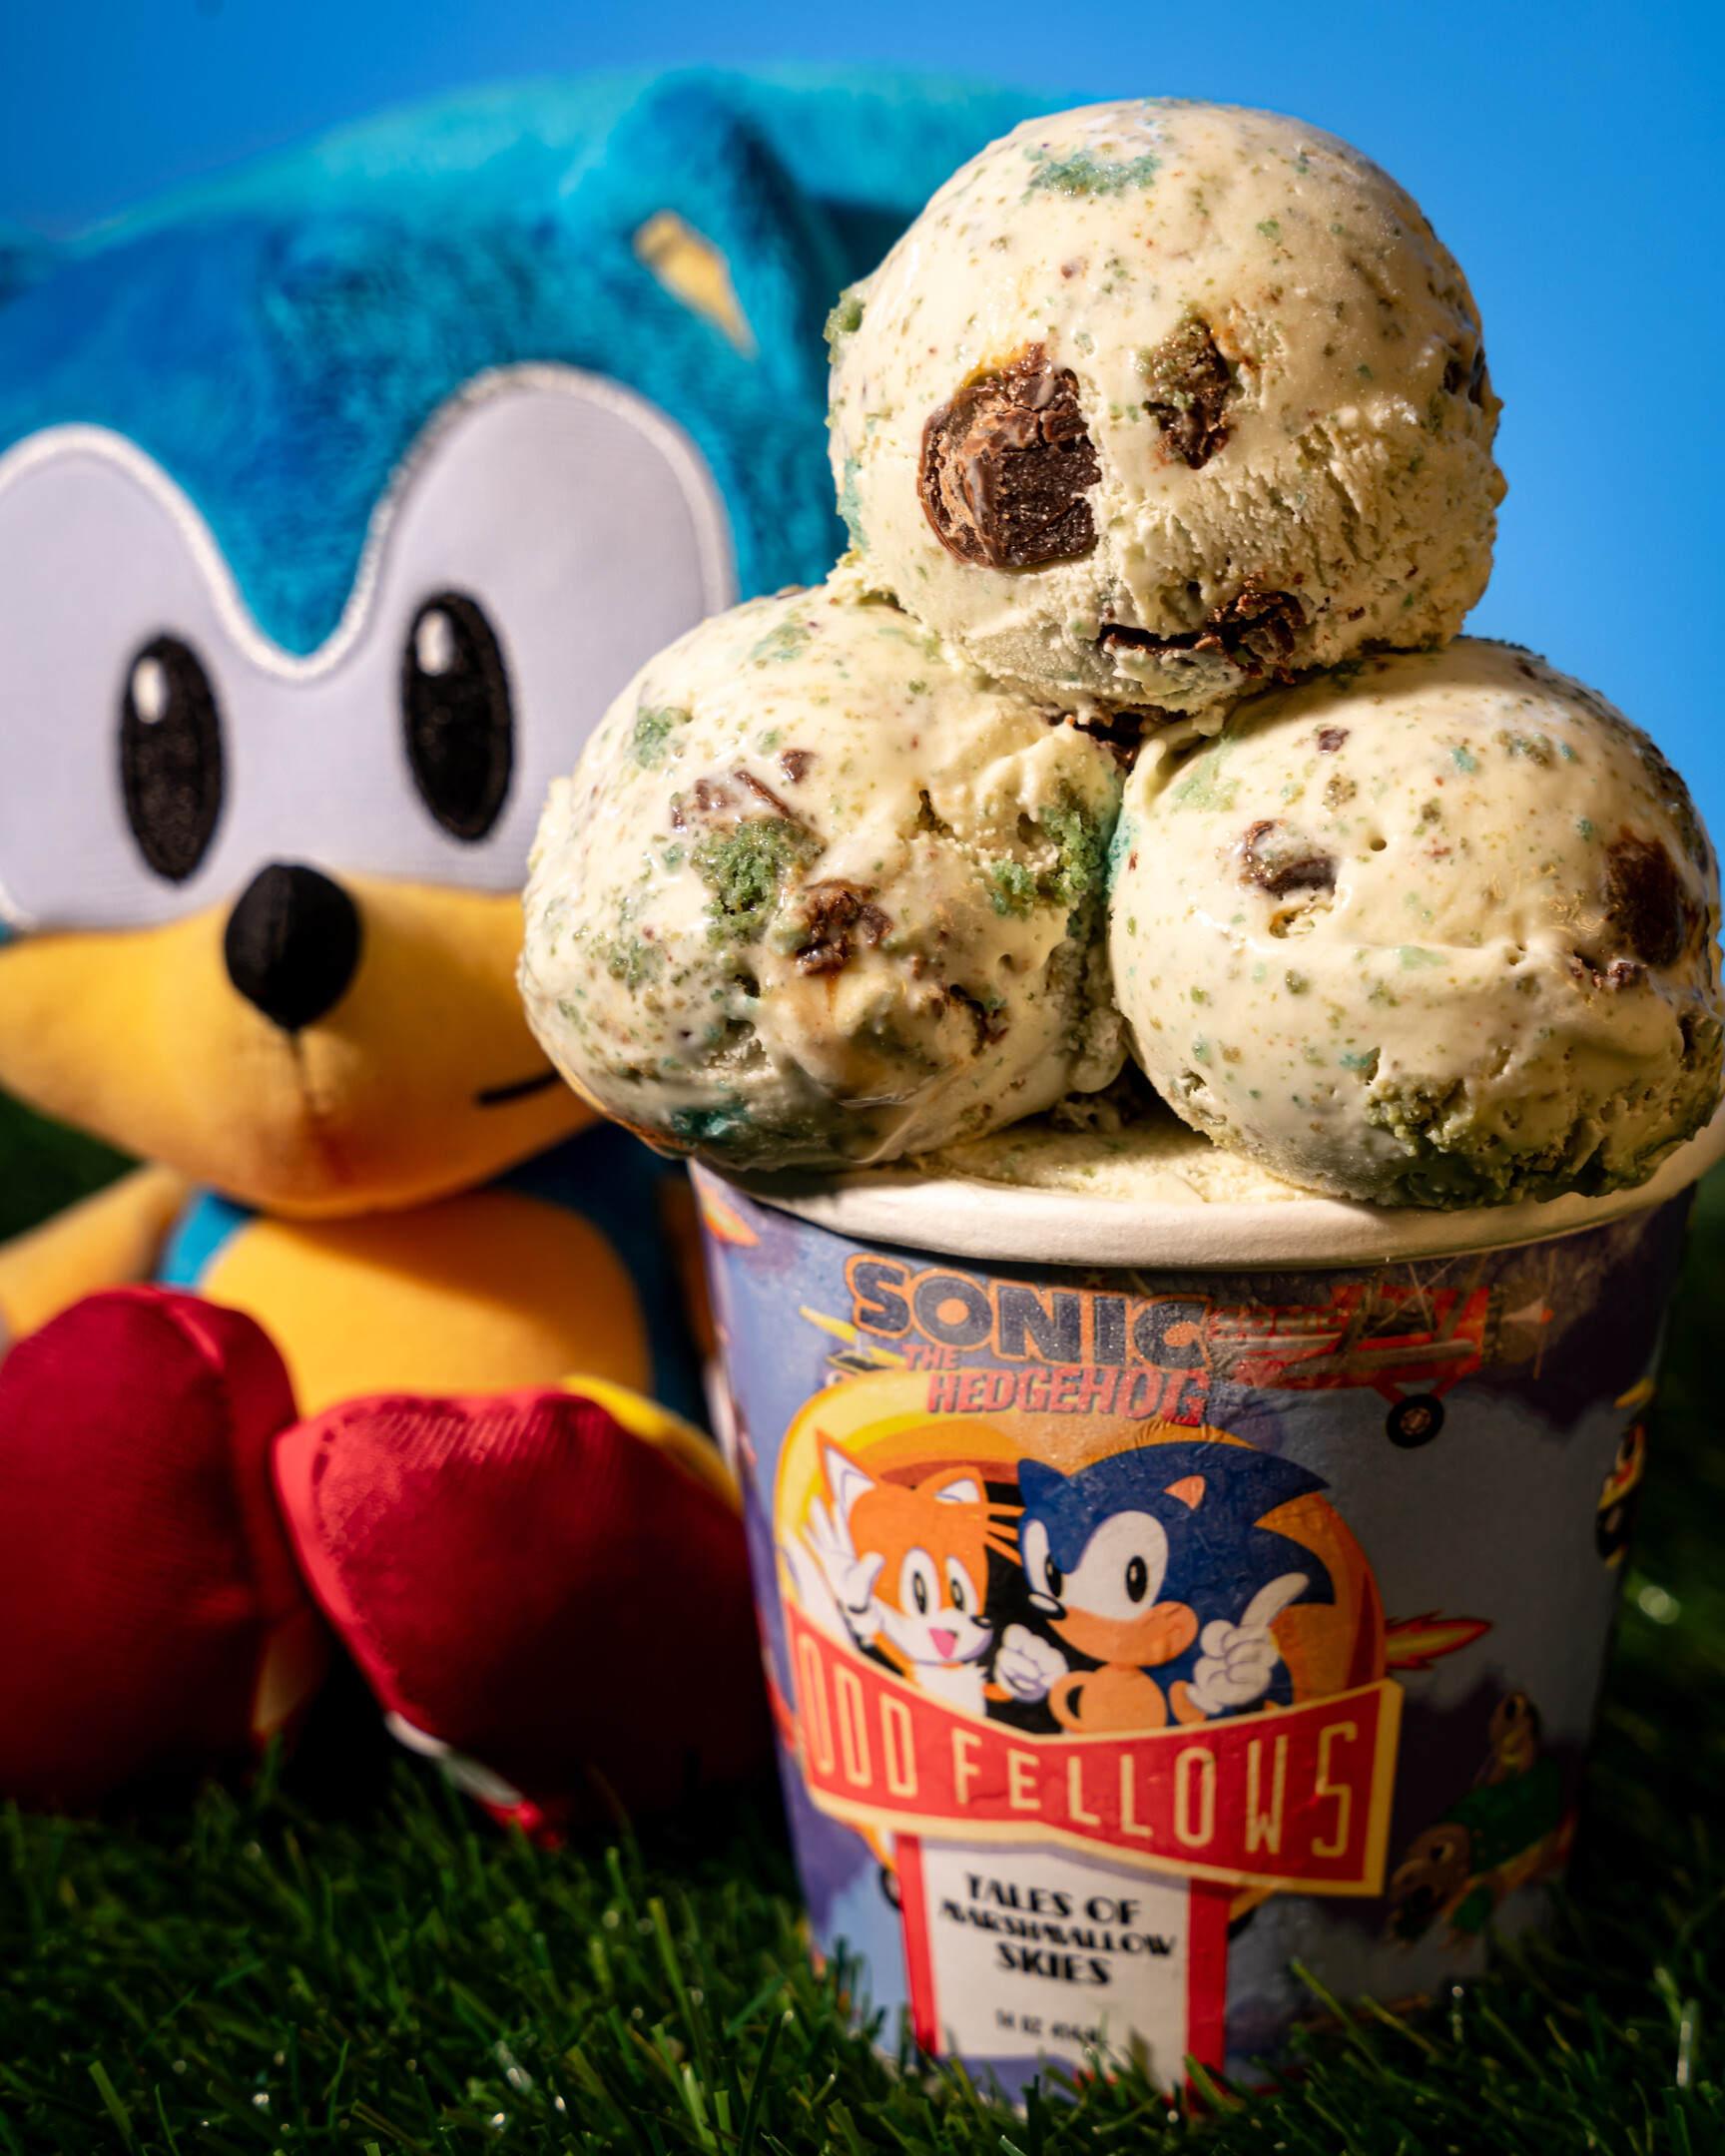 SEGA & OddFellows Ice Cream Collab On Sonic The Hedgehog Flavors